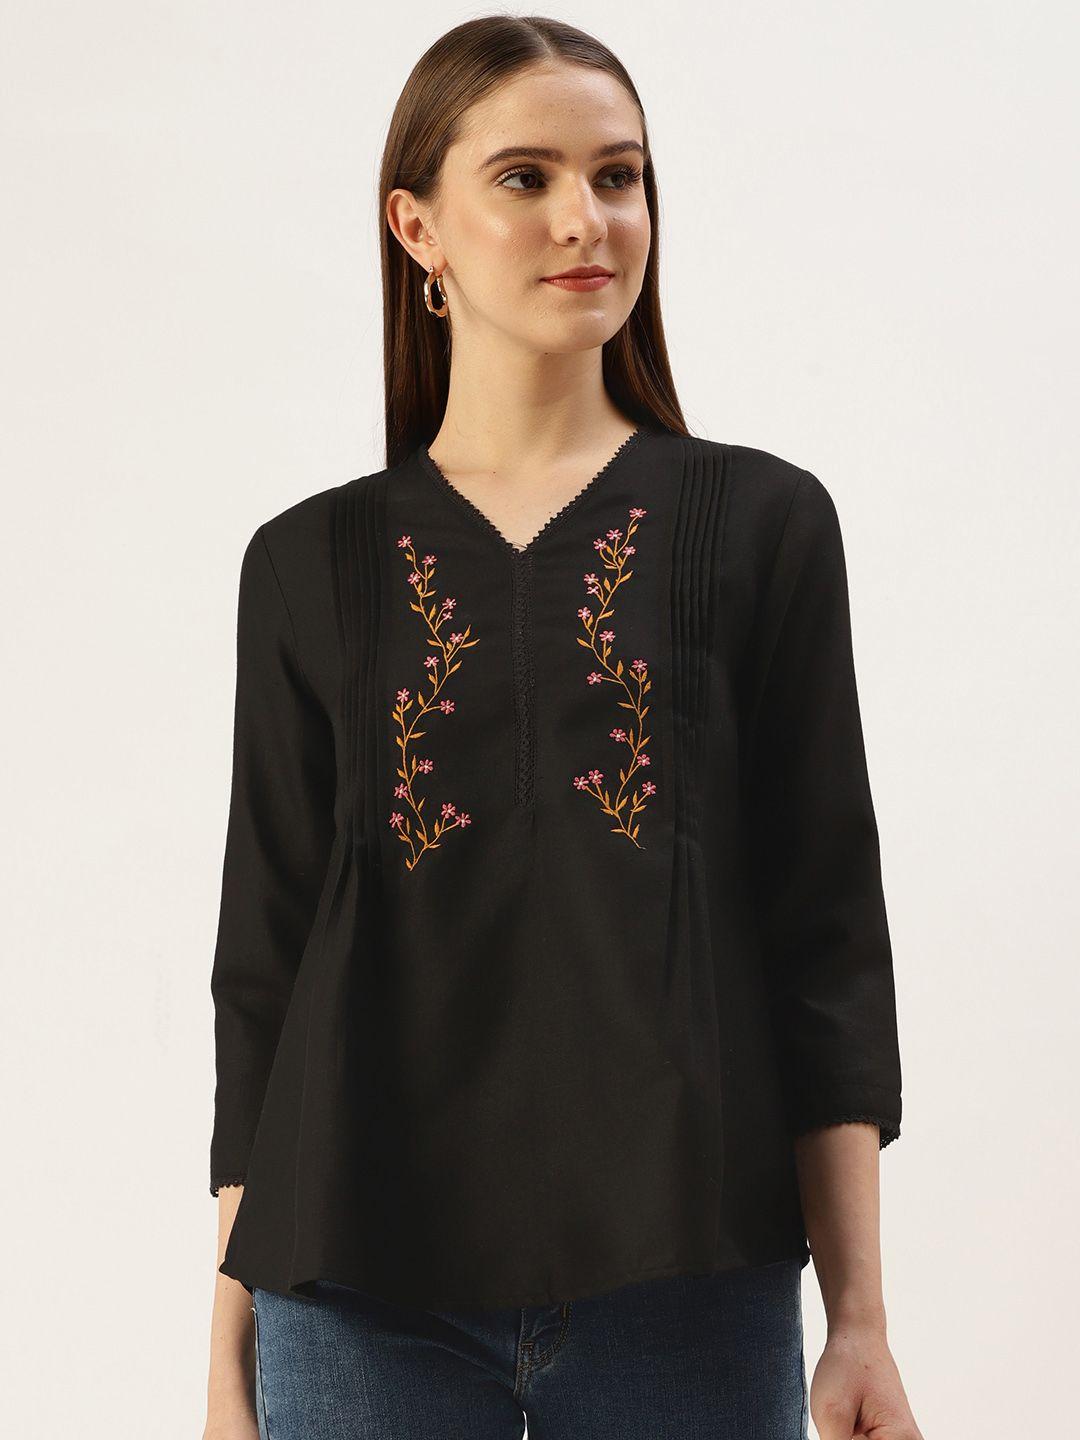 off-label-black-floral-embroidered-top